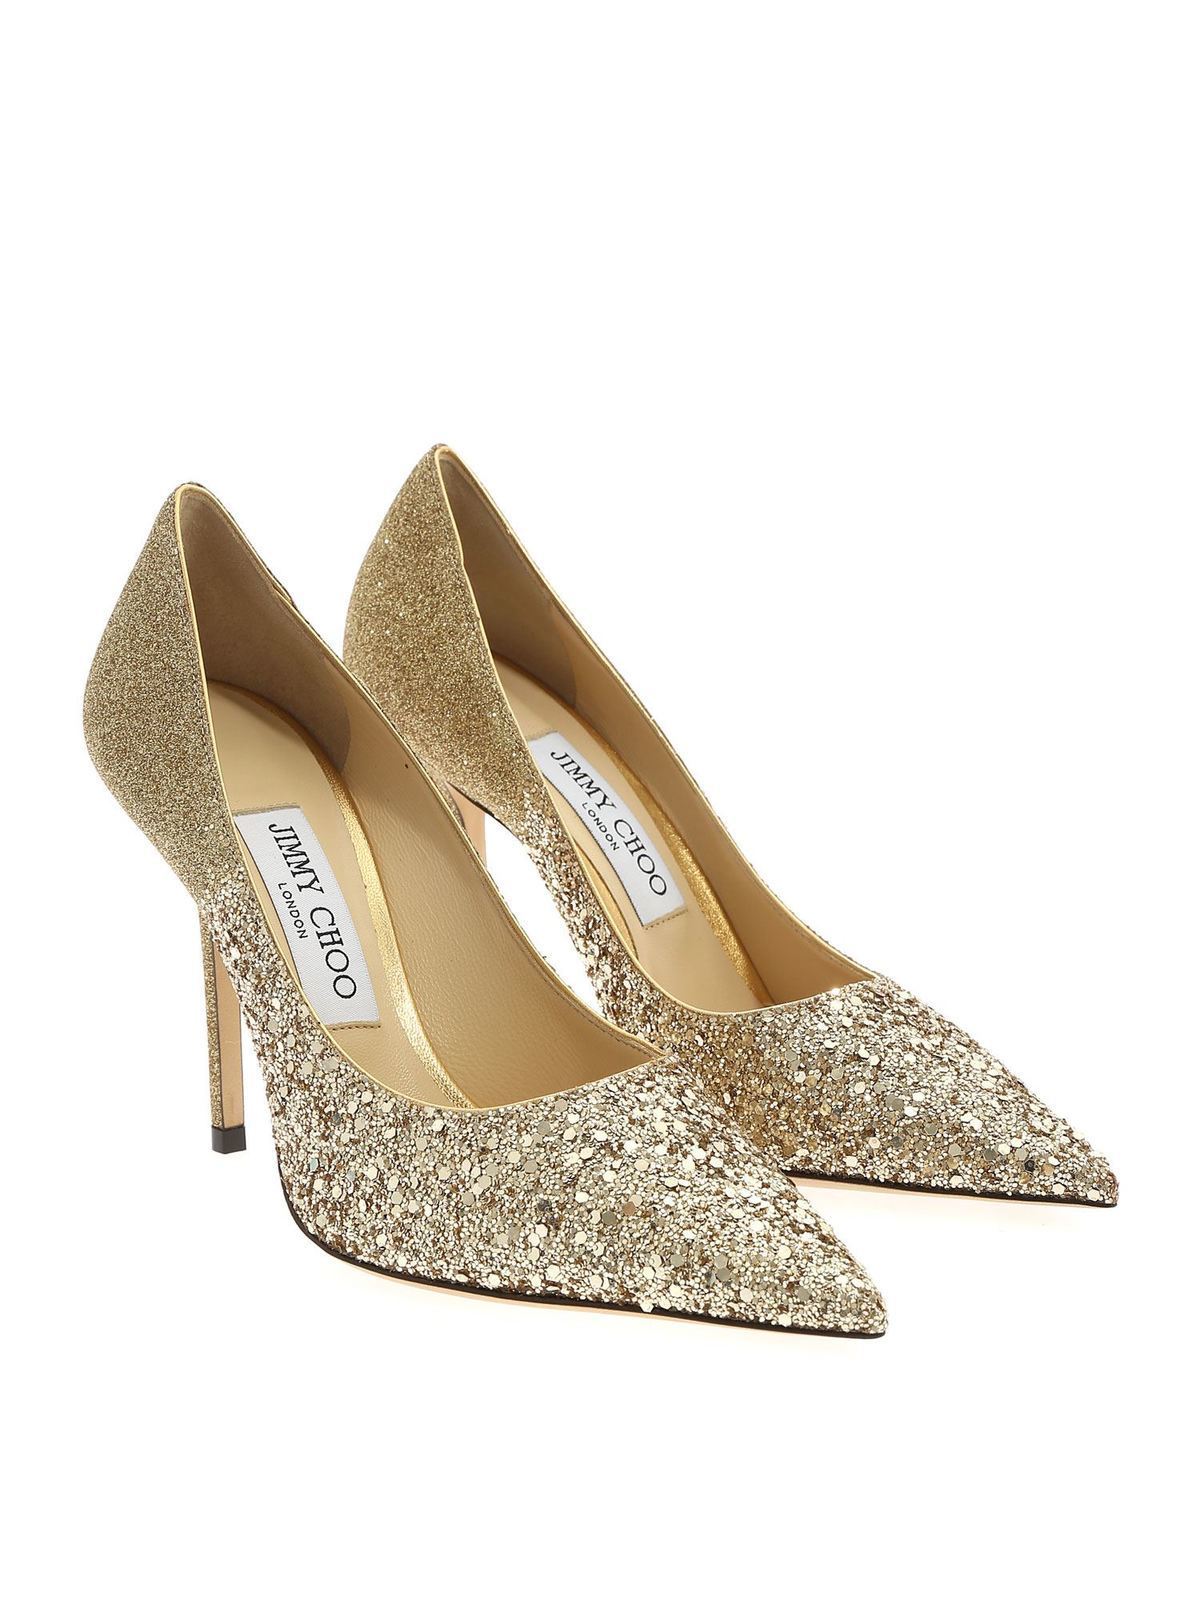 Jimmy Choo Edina Rose Gold Sandals 40 Heels evening shoes | eBay